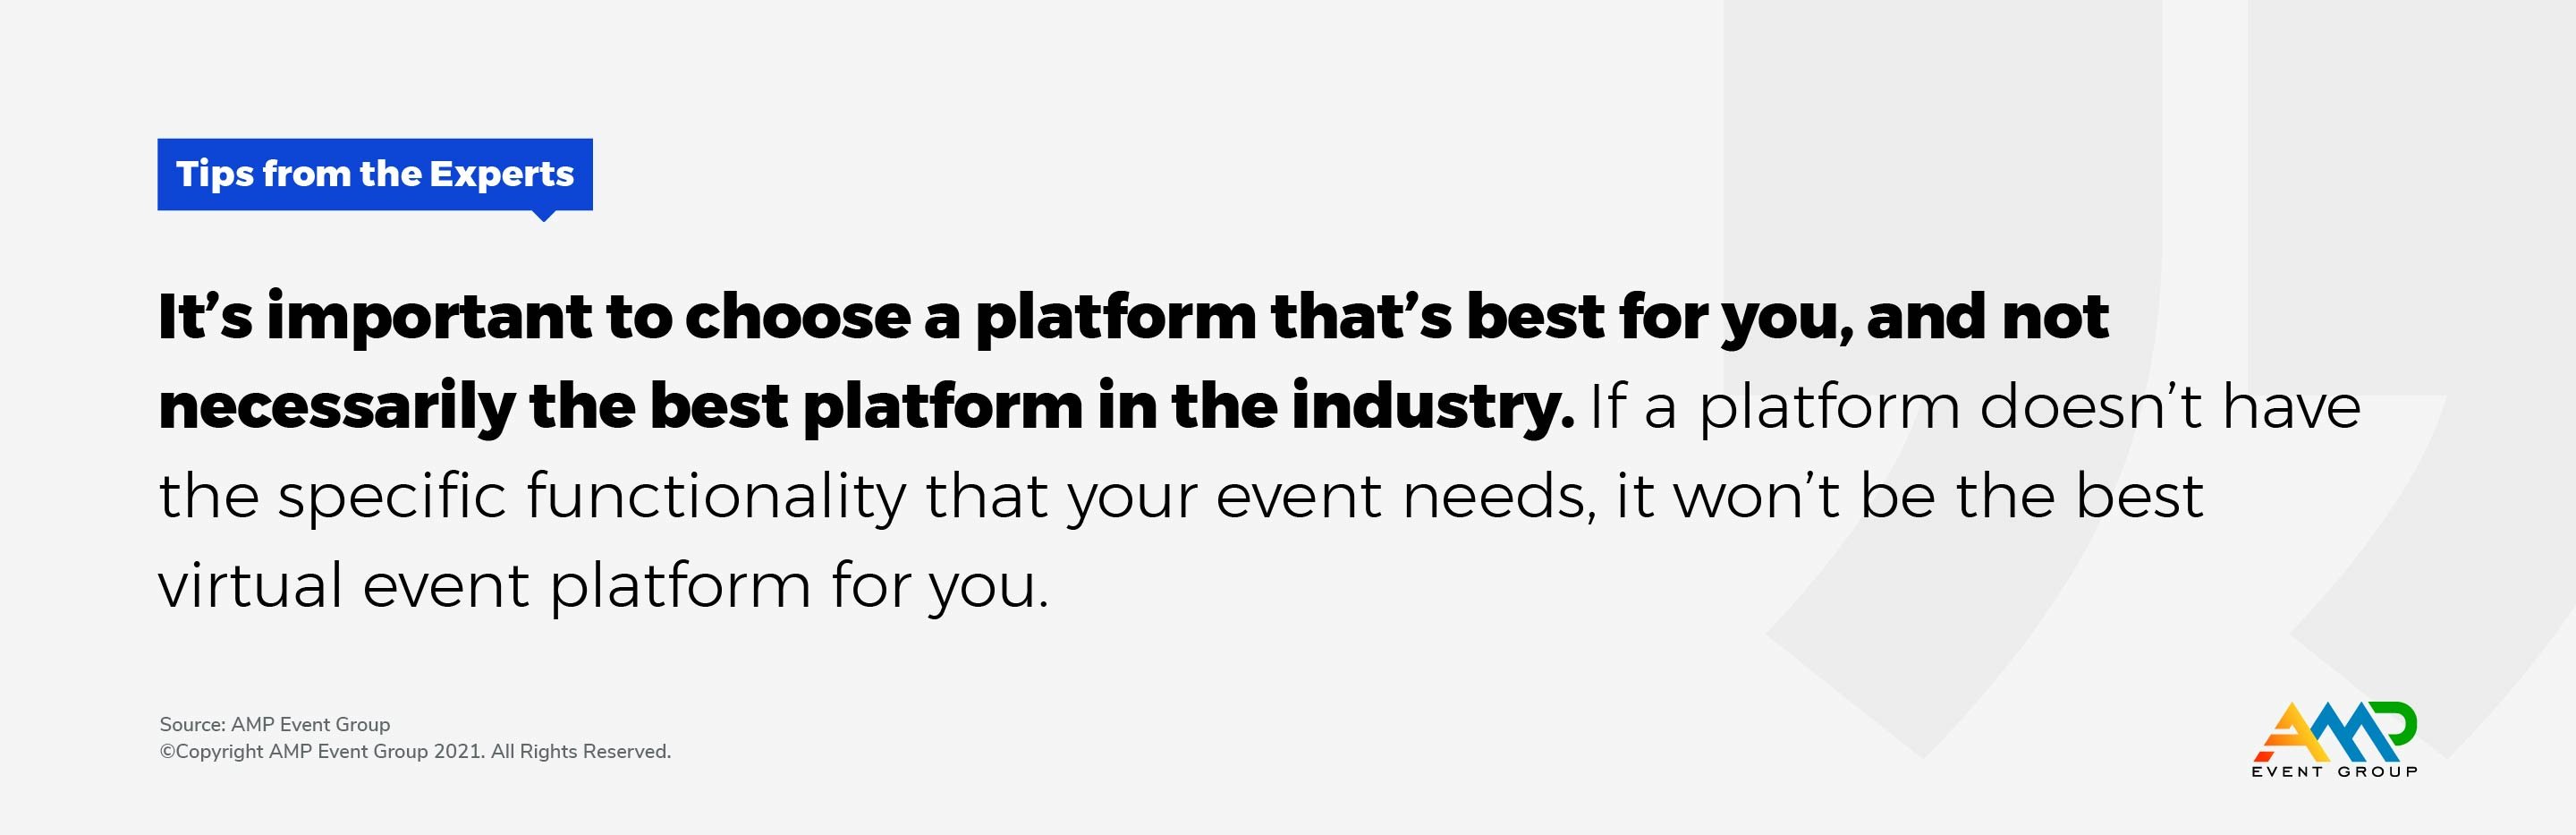 Amp Events: Virtual Event Platform - choose a platform that's best for you 